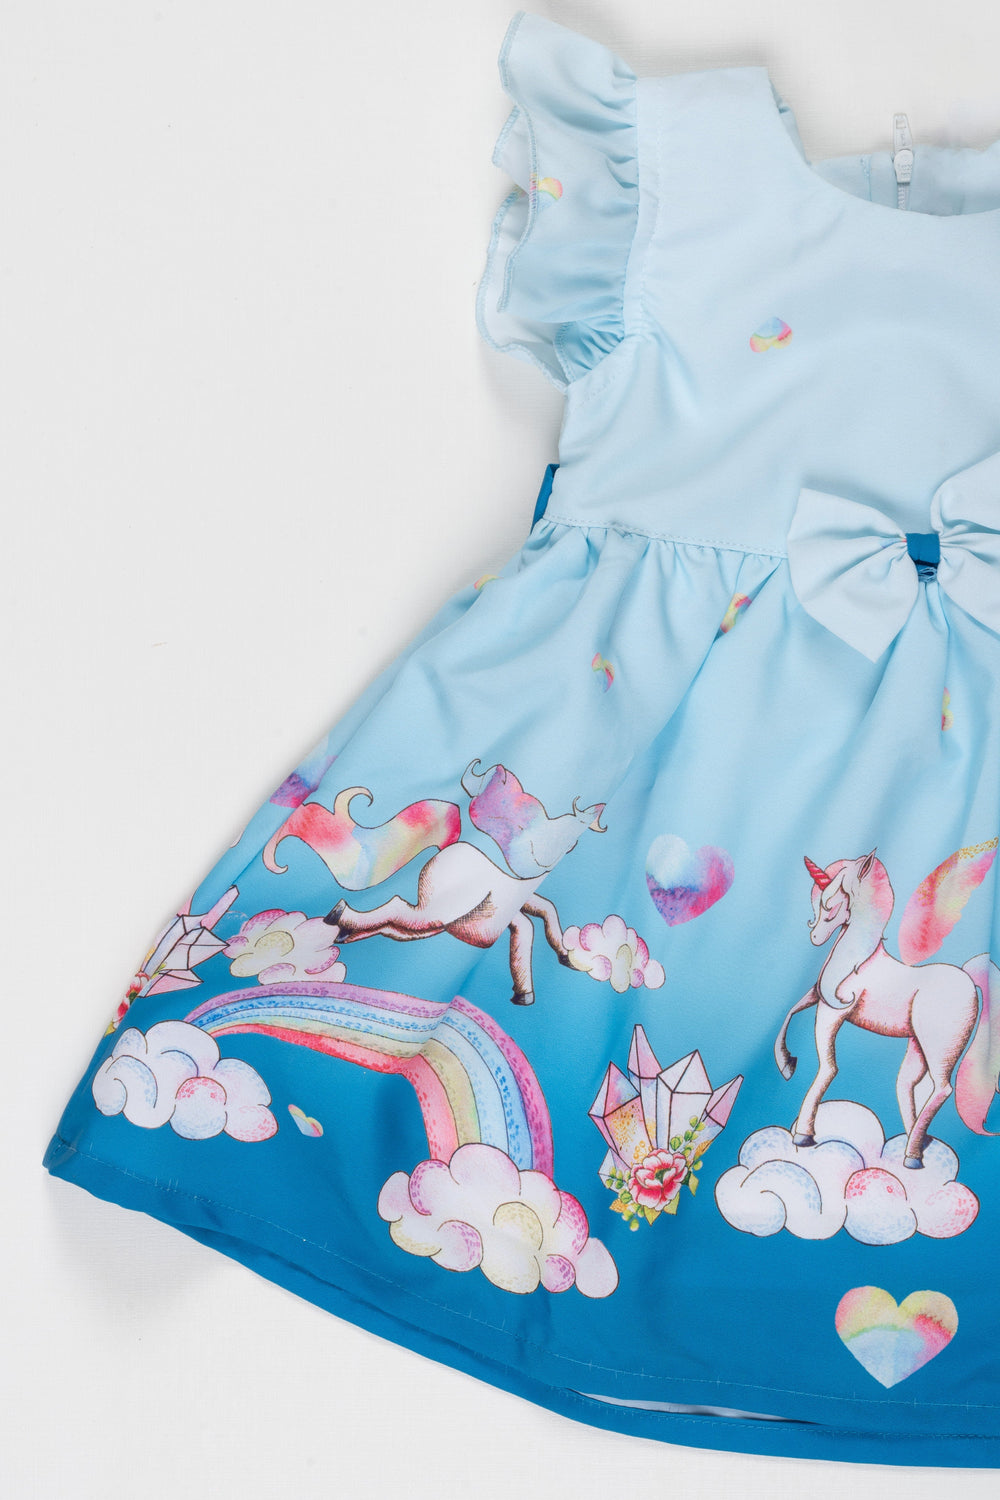 The Nesavu Baby Fancy Frock Toddler Girl's Enchanted Unicorn and Rainbow Dress with Bow Detail Nesavu Charming Unicorn Rainbow Dress for Toddlers | A Fairytale Ensemble | The Nesavu